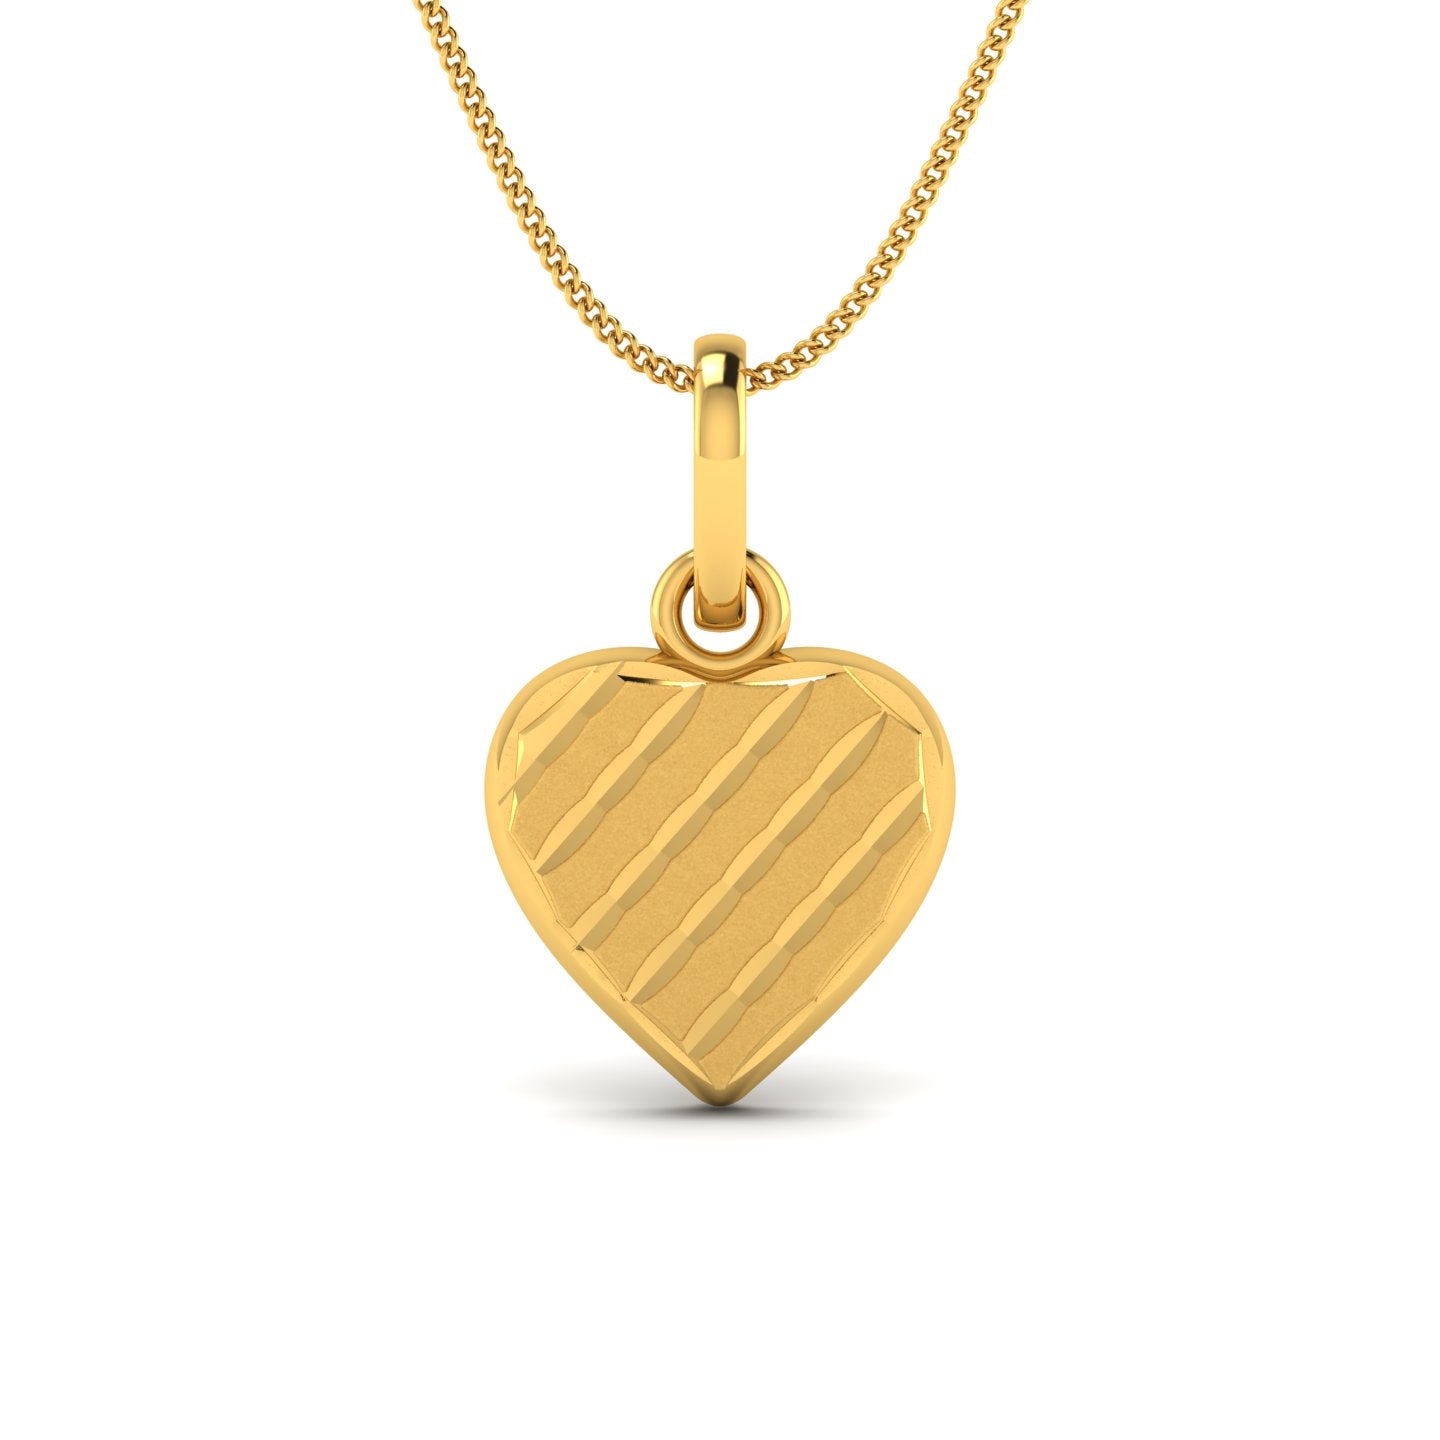 Heart shaped 22KT pendant